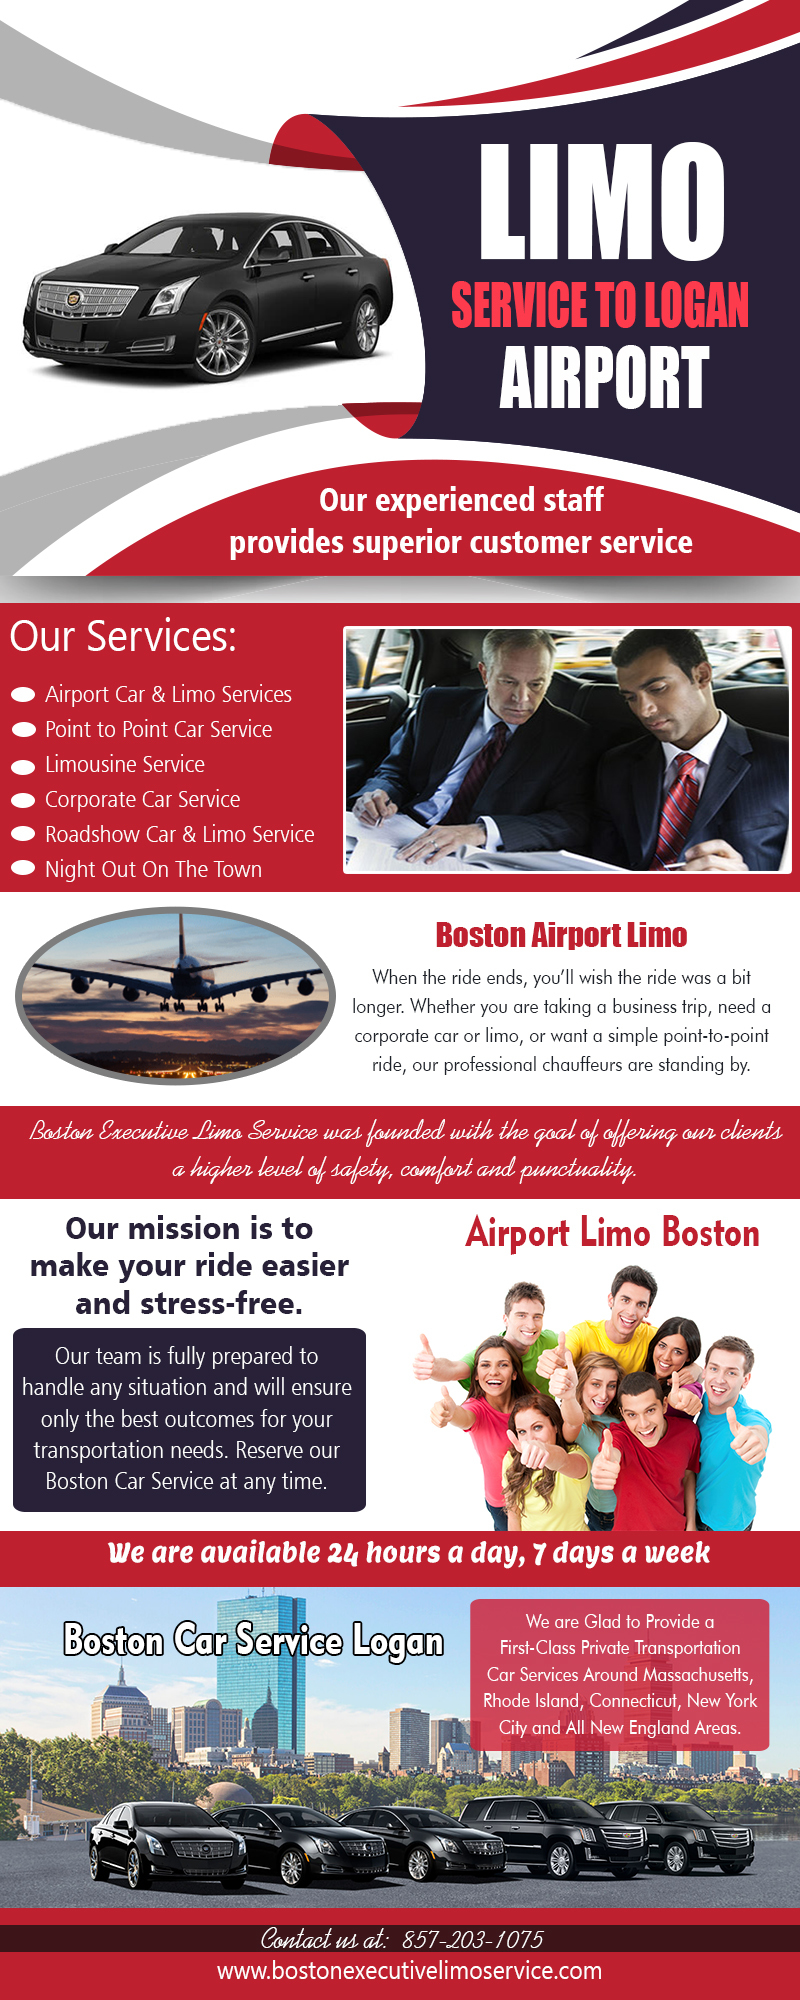 Logan Airport Limo Service | 857-203-1075 | bostonexecutivelimoservice.com